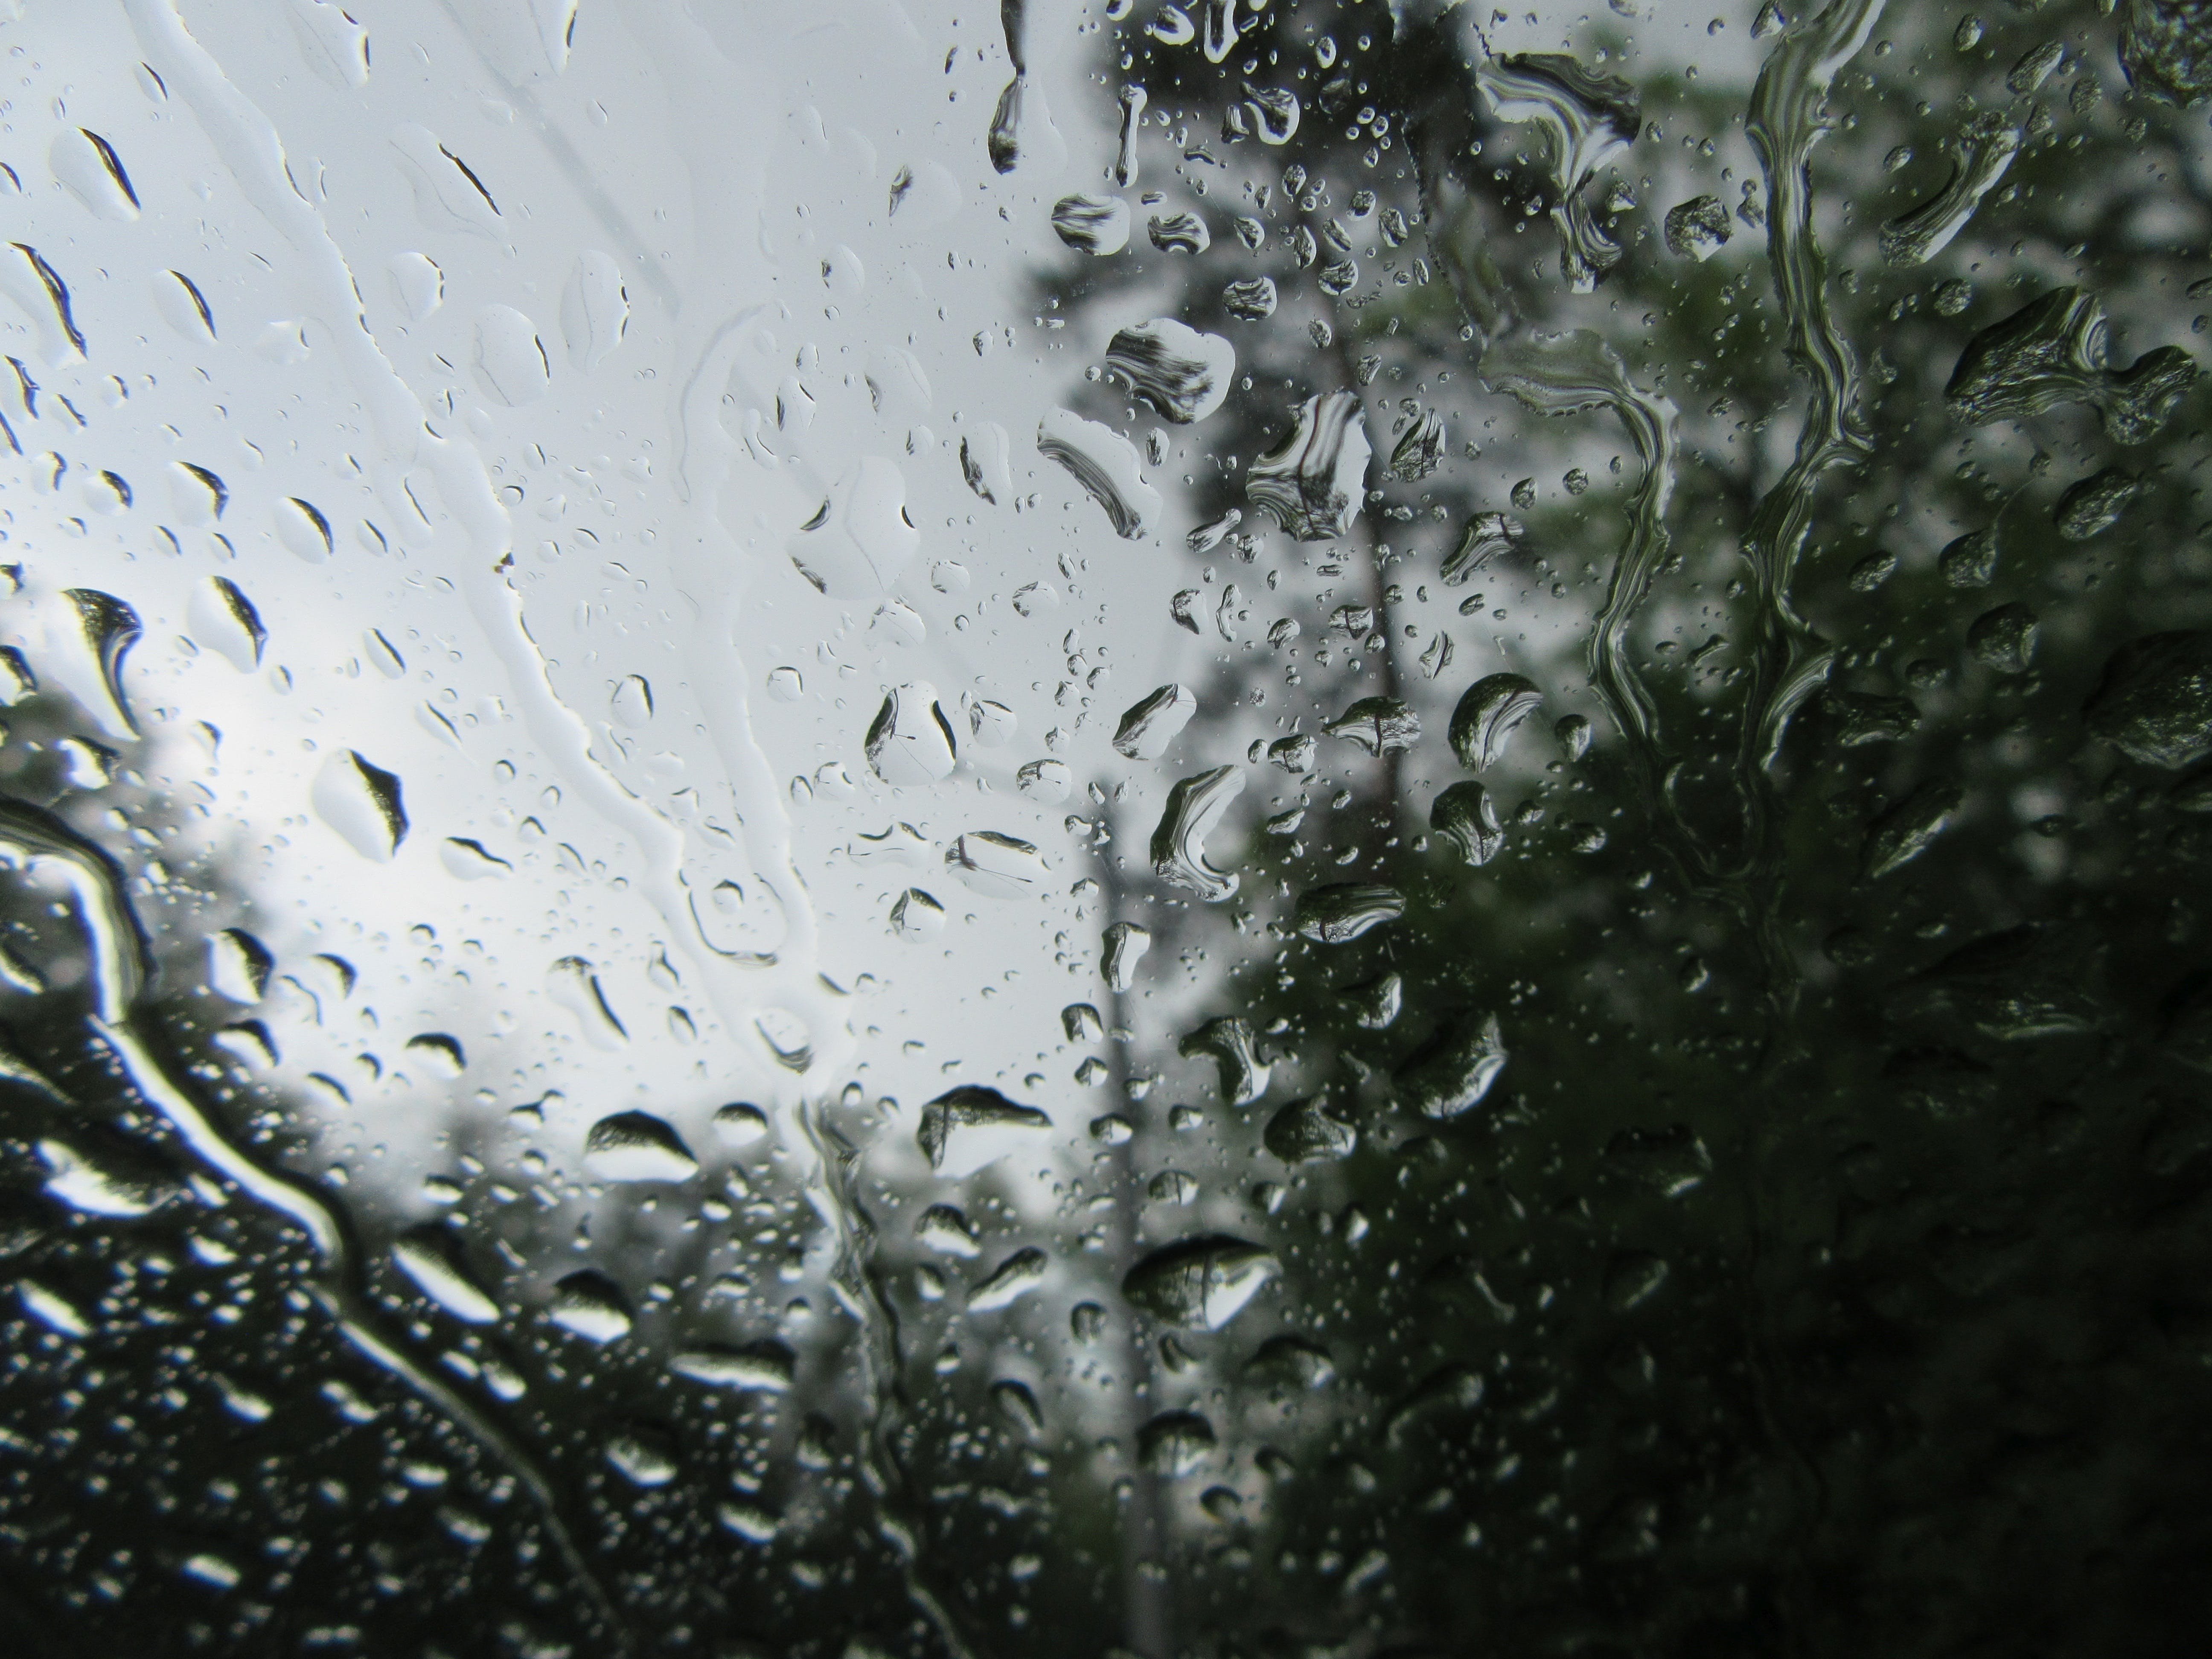 Картинка капли дождя. Капли на стекле. Мокрое стекло. Капли дождя. Капли воды на стекле.